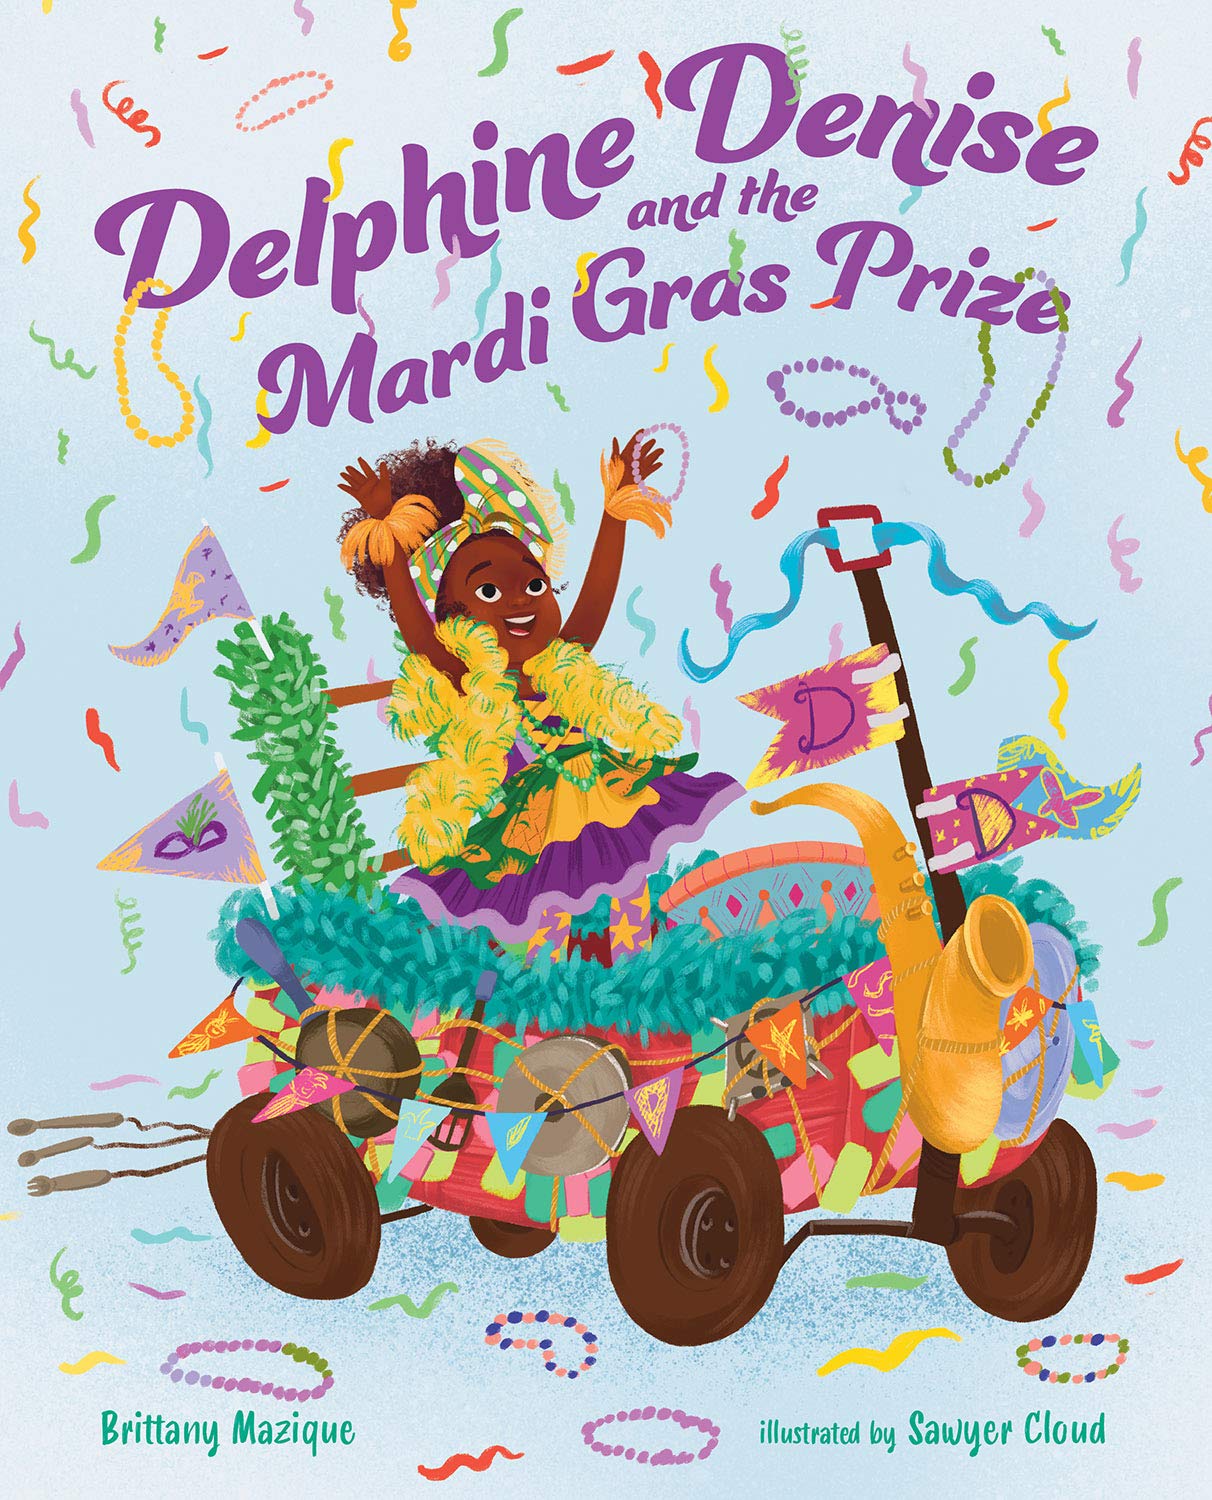 Delphine Denise and the Mardi Gras prize book cover.